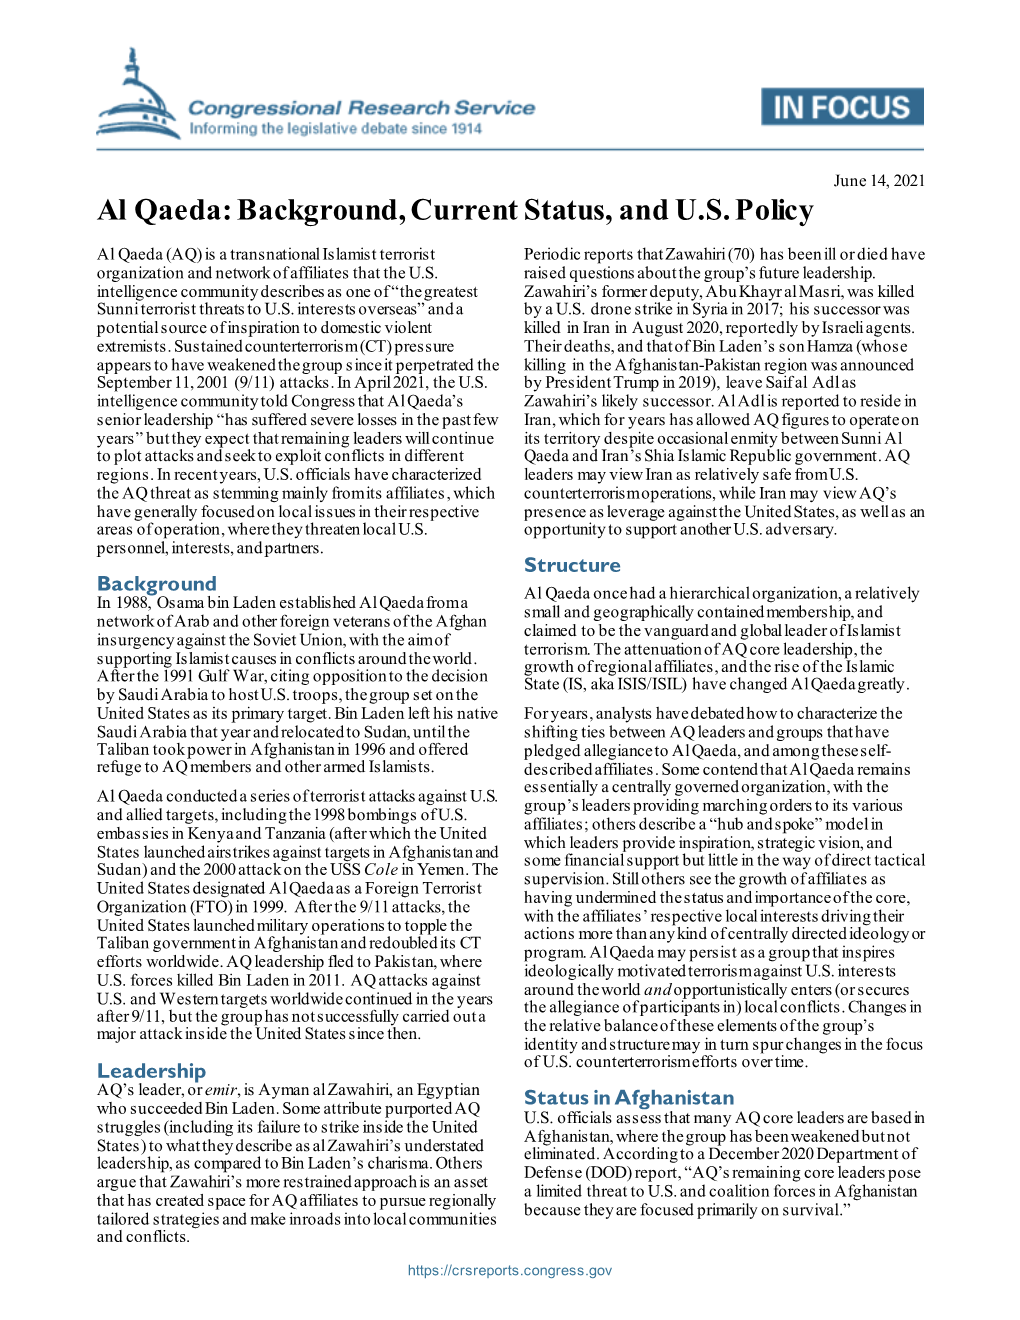 Al Qaeda: Background, Current Status, and U.S